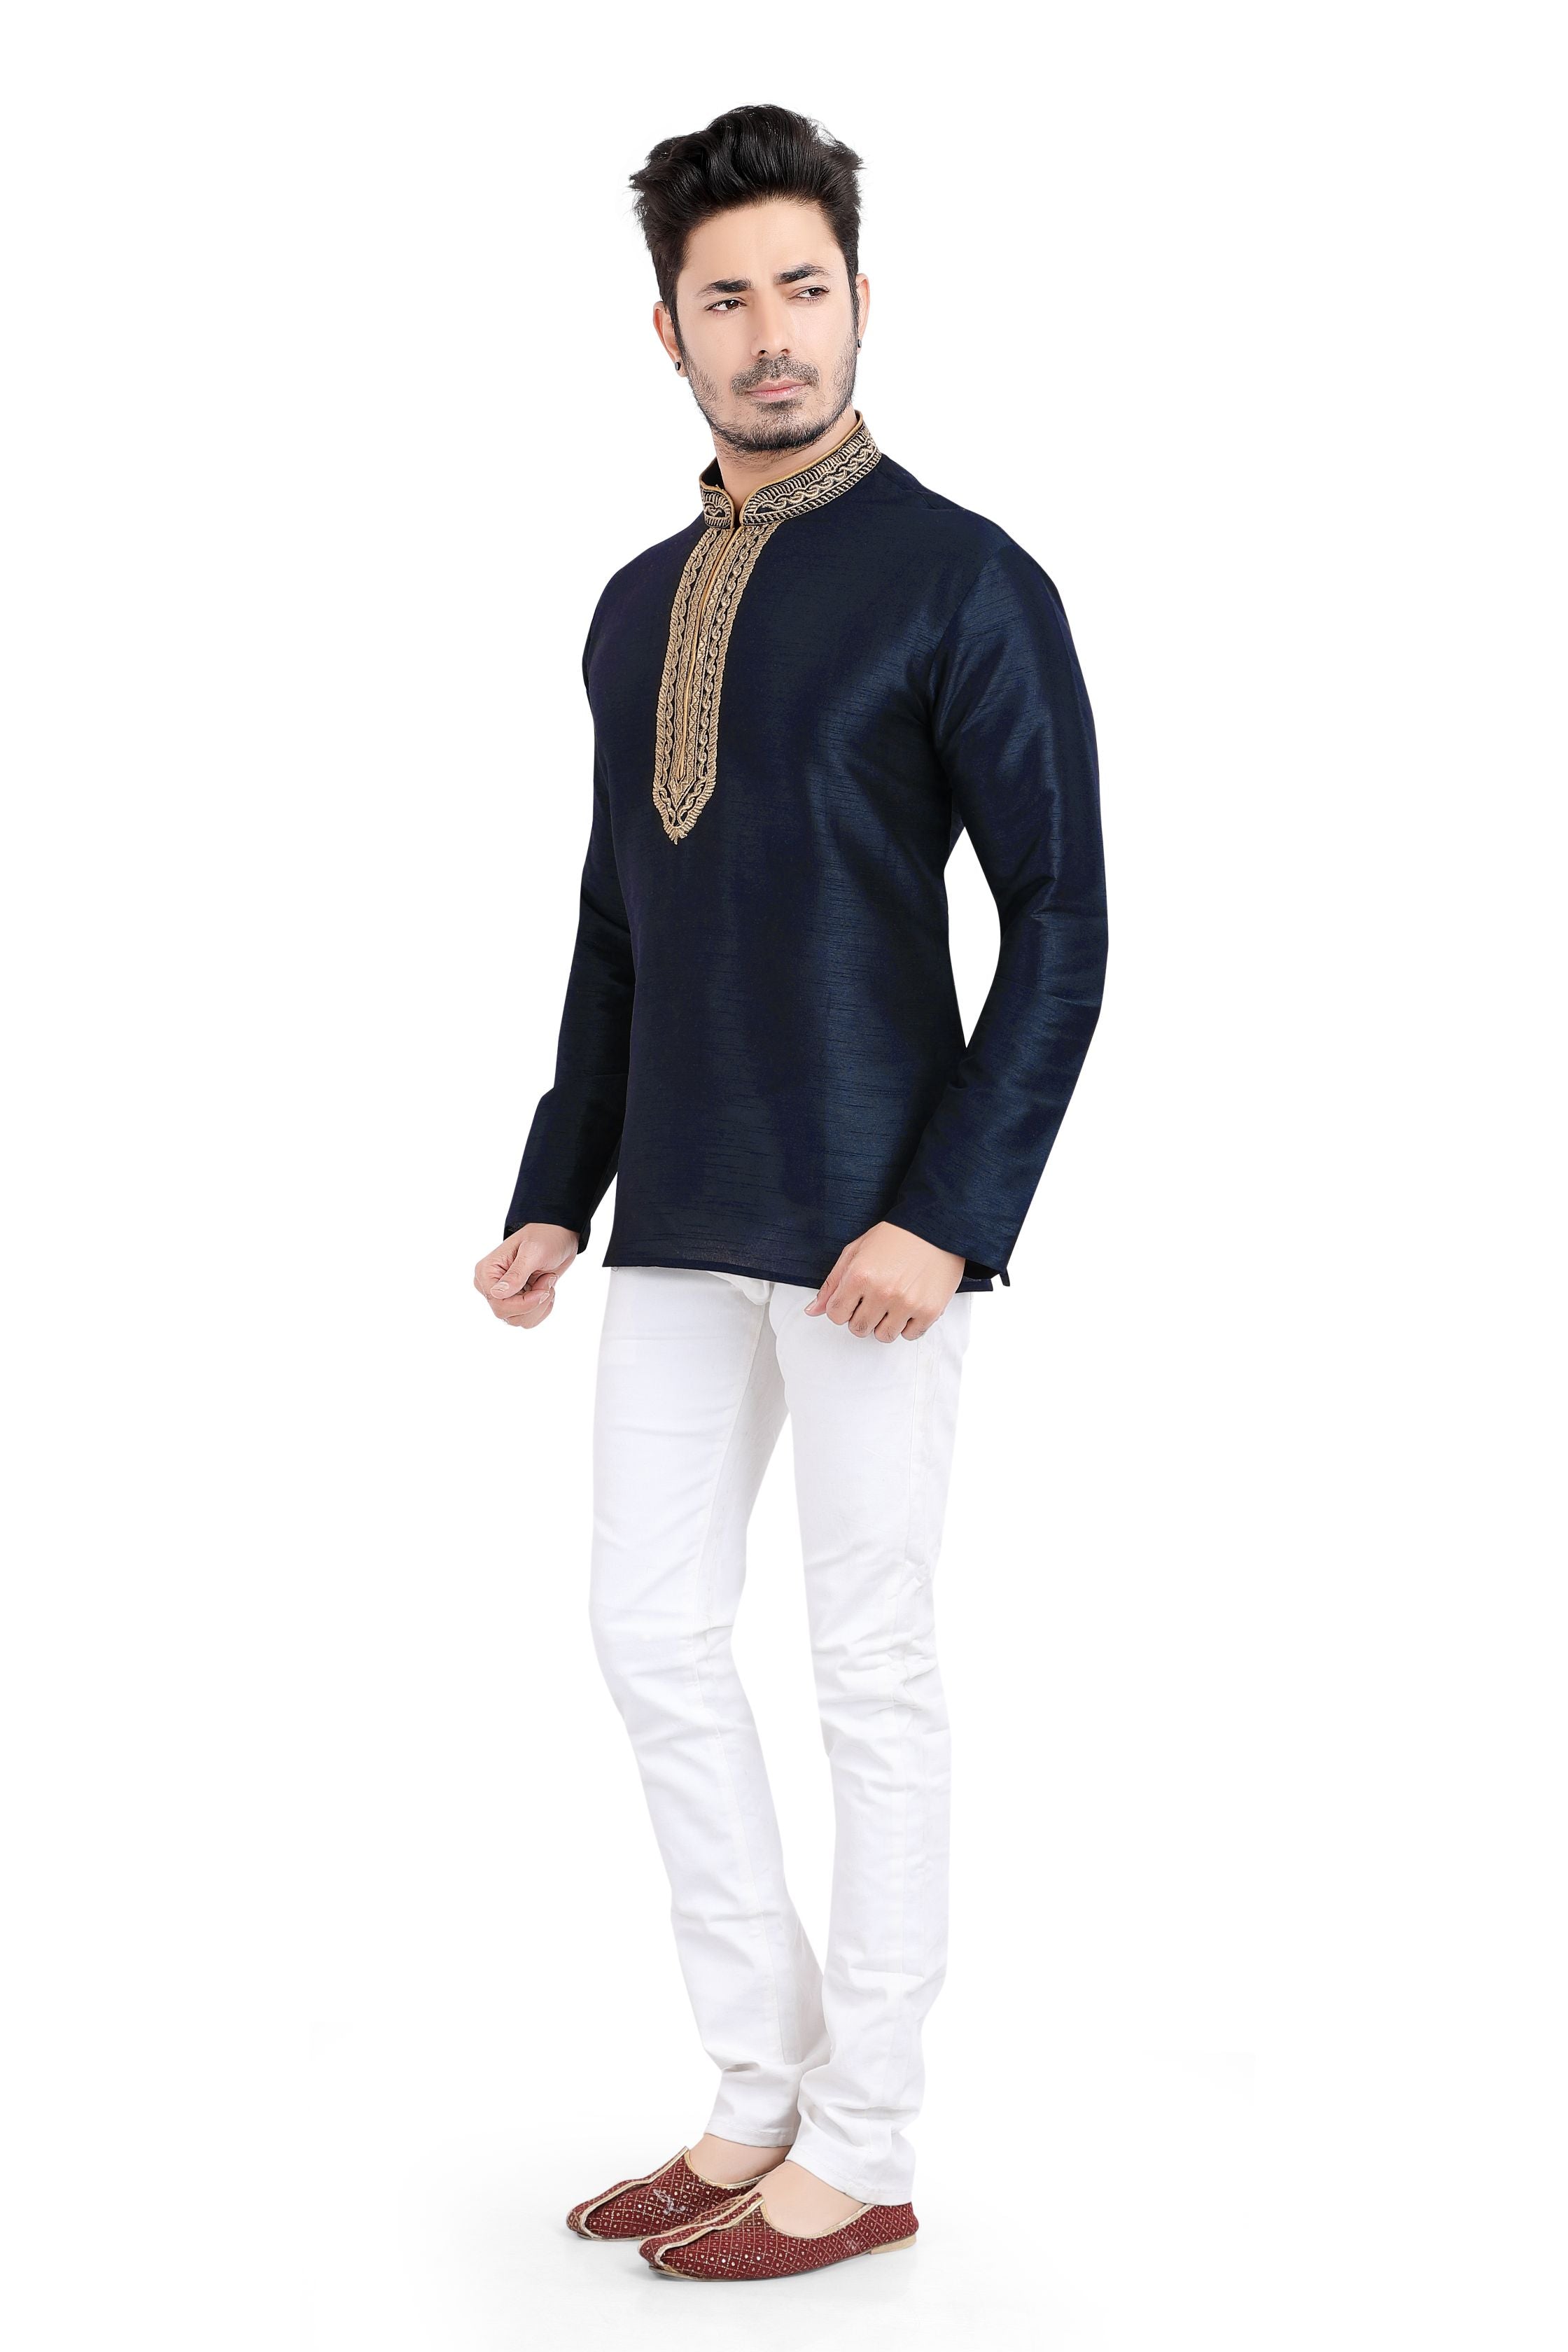 Banarasi Dupion Silk Short Kurta with embroidery in Navy Blue color - Premium kurta pajama from Dapper Ethnic - Just $49! Shop now at Dulhan Exclusives